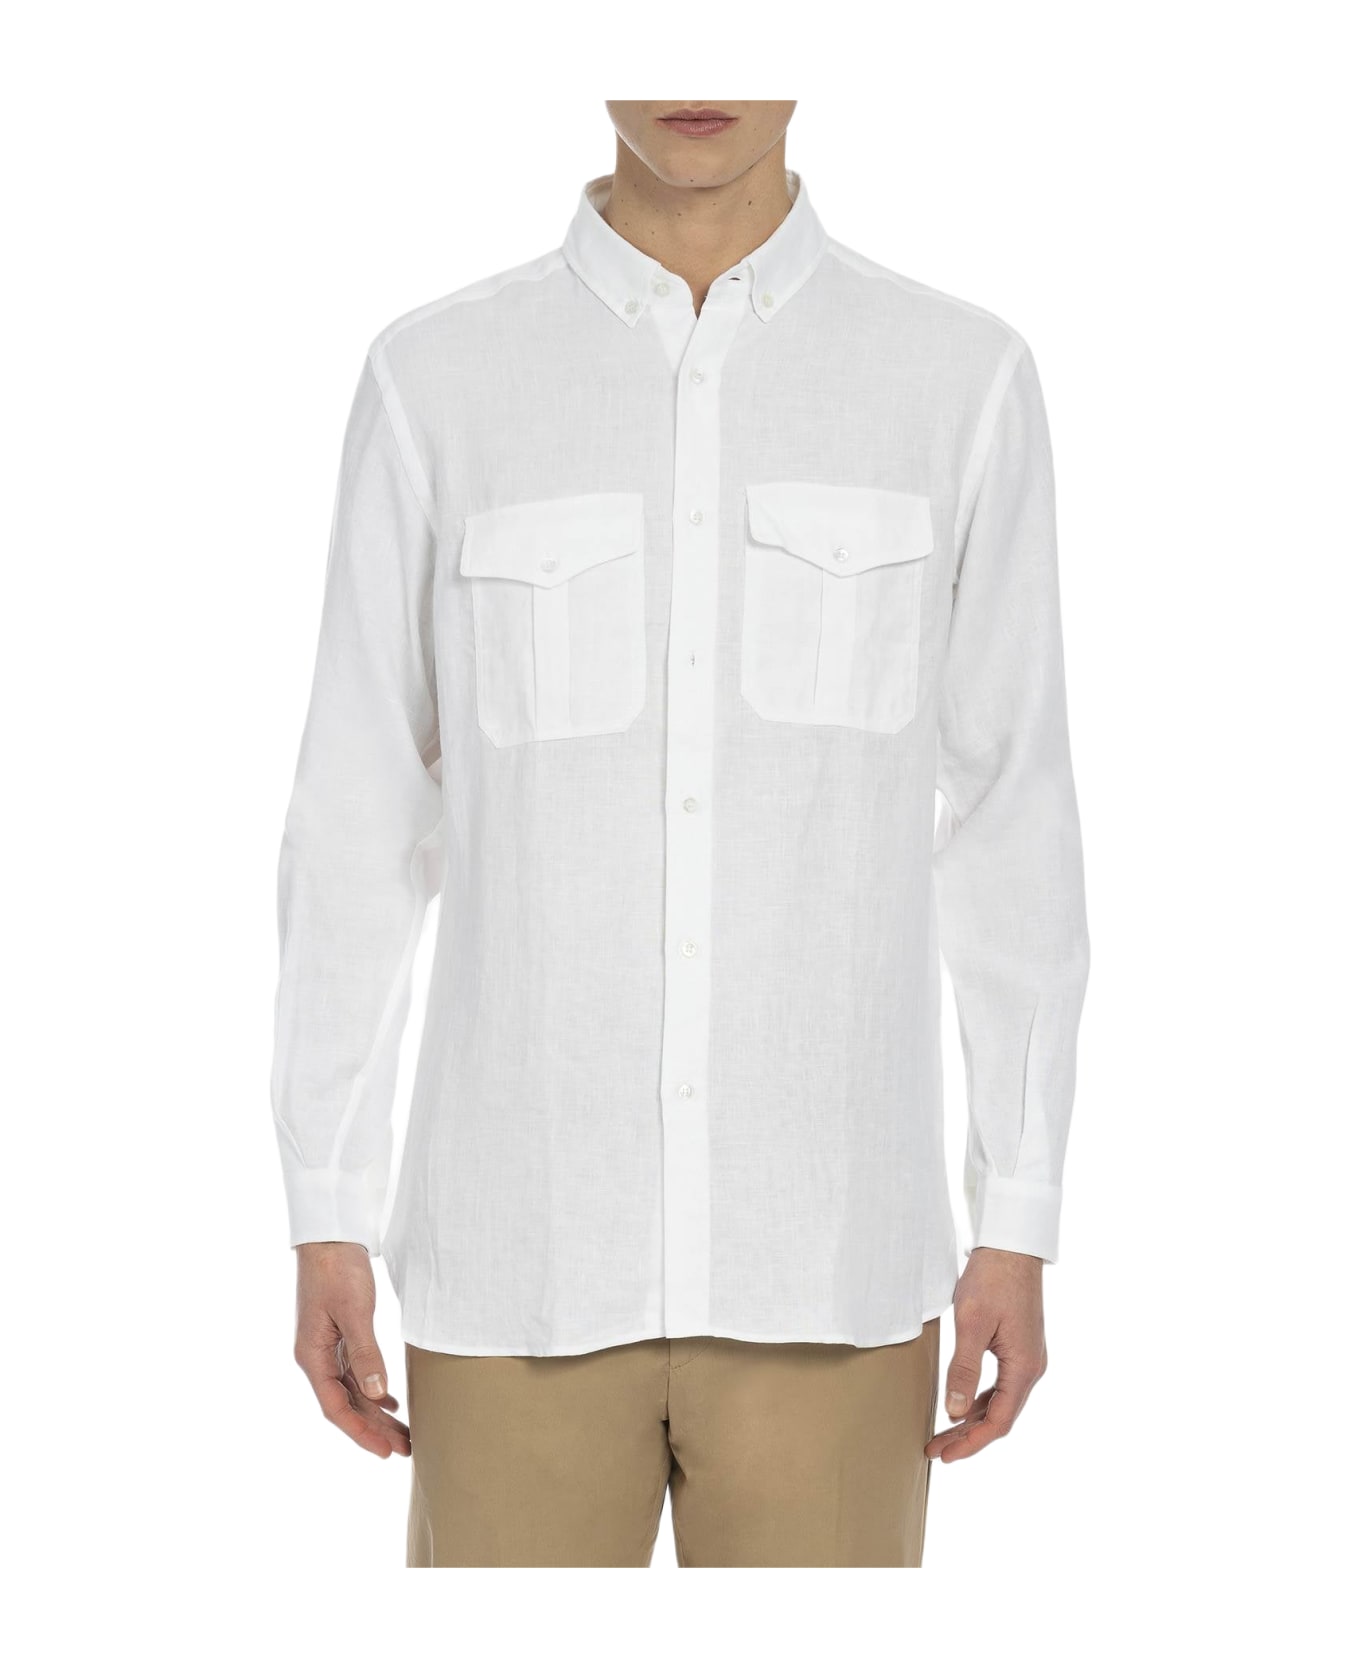 Larusmiani 'nairobi' Shirt Shirt - White